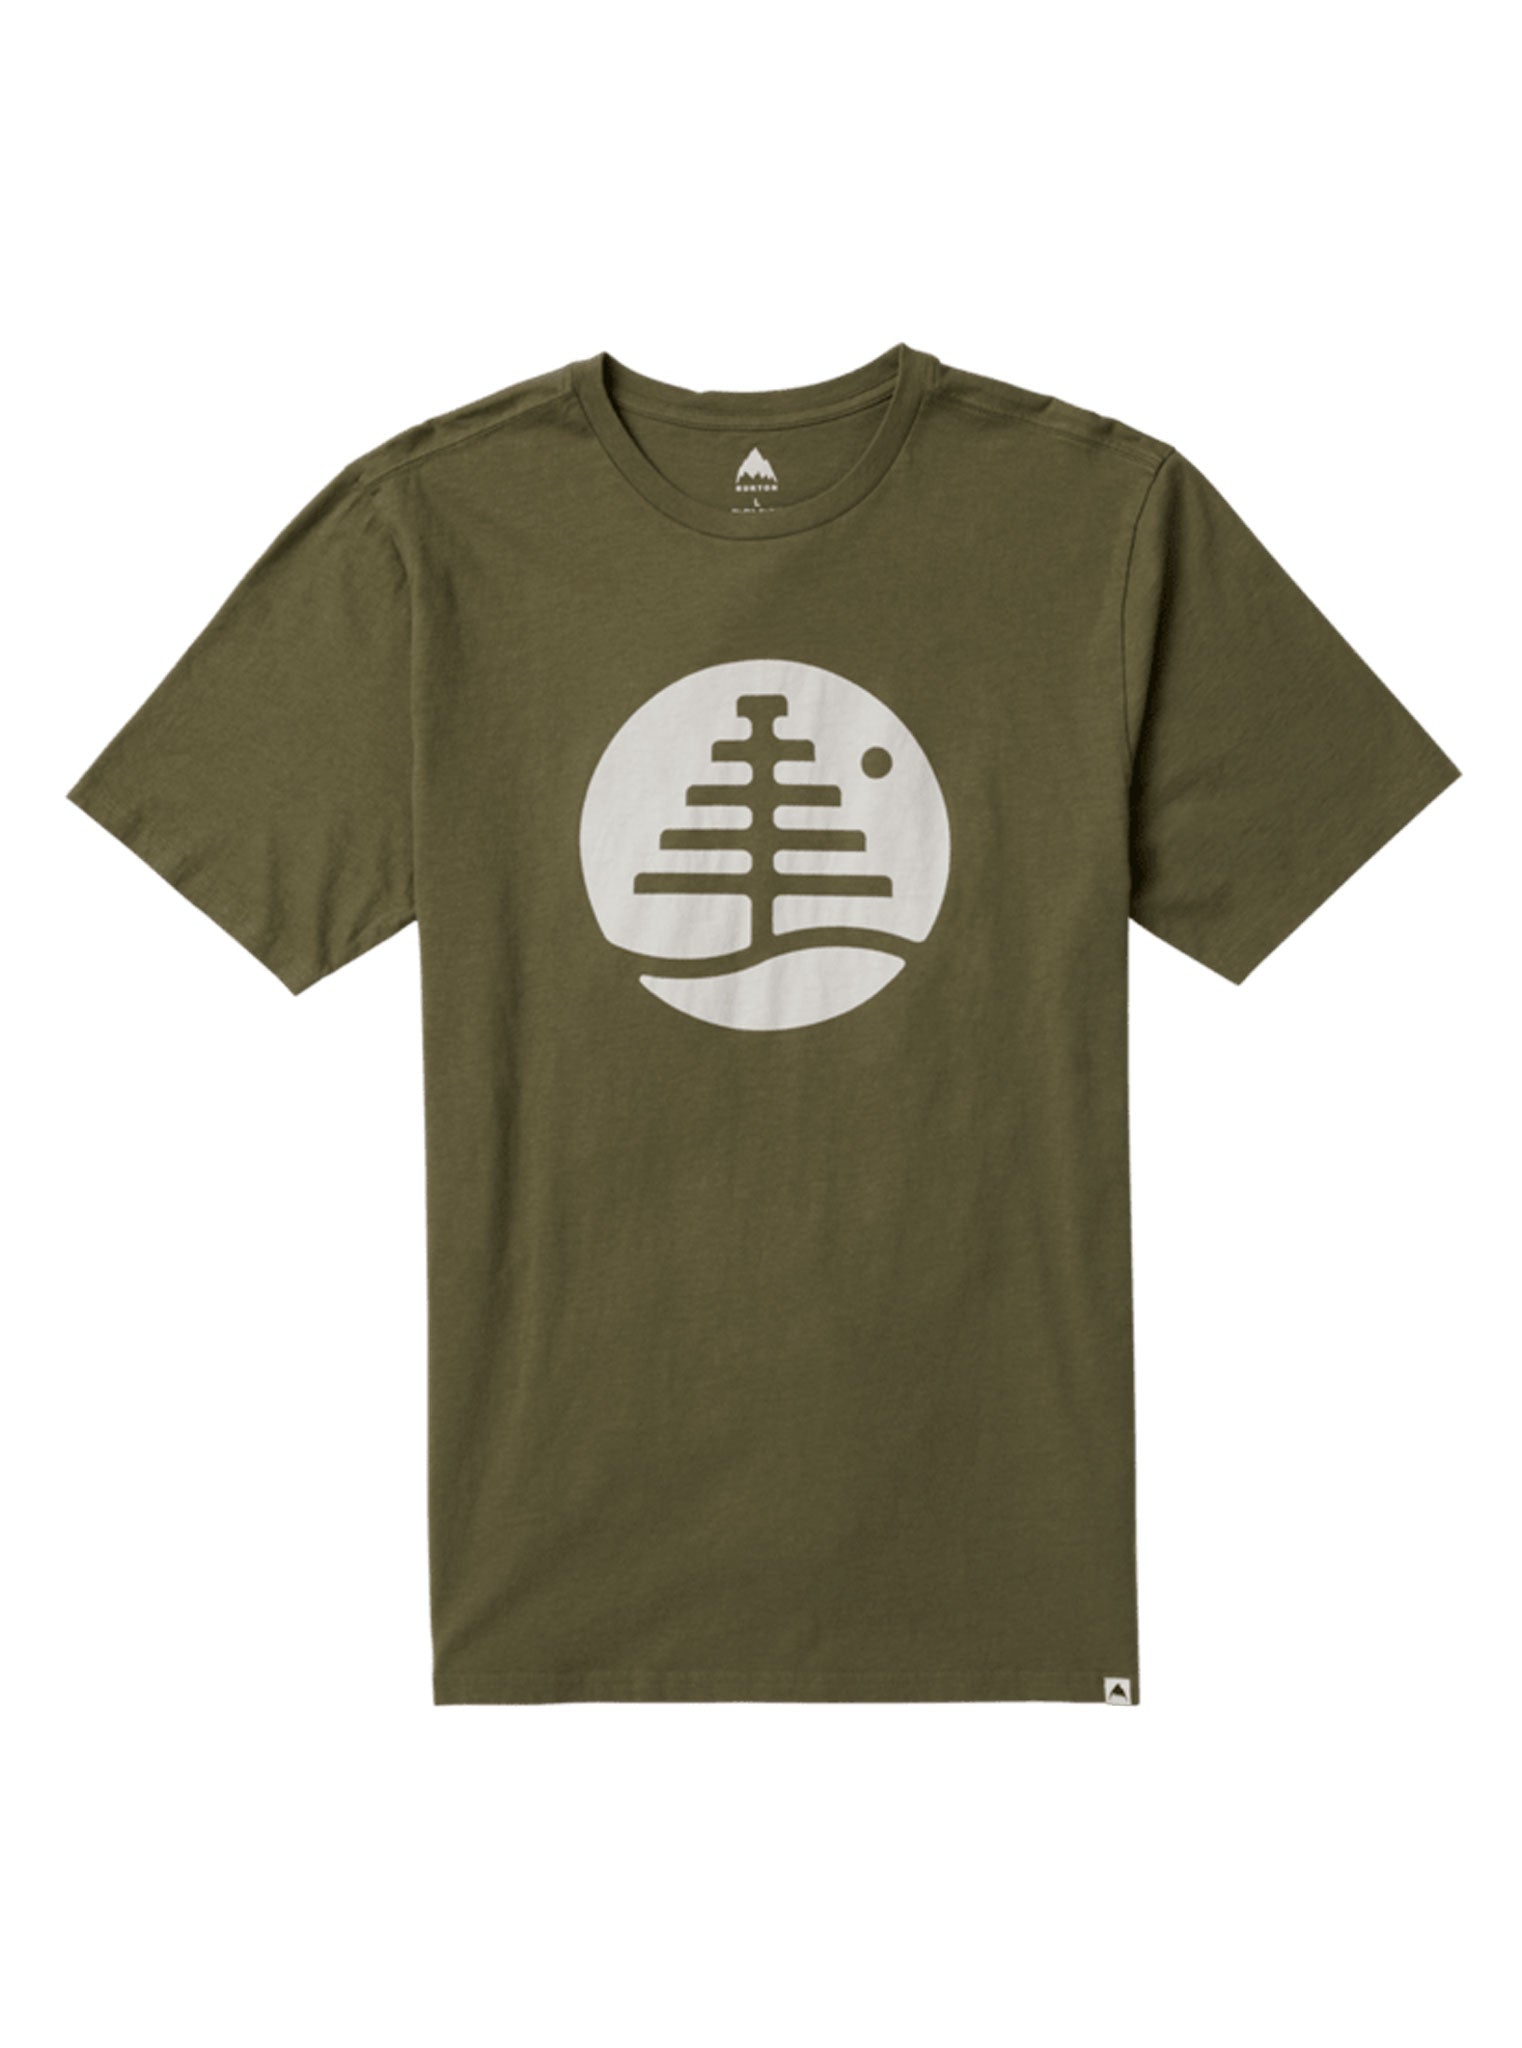 BURTON Family Tree t-shirt - Forest Moss